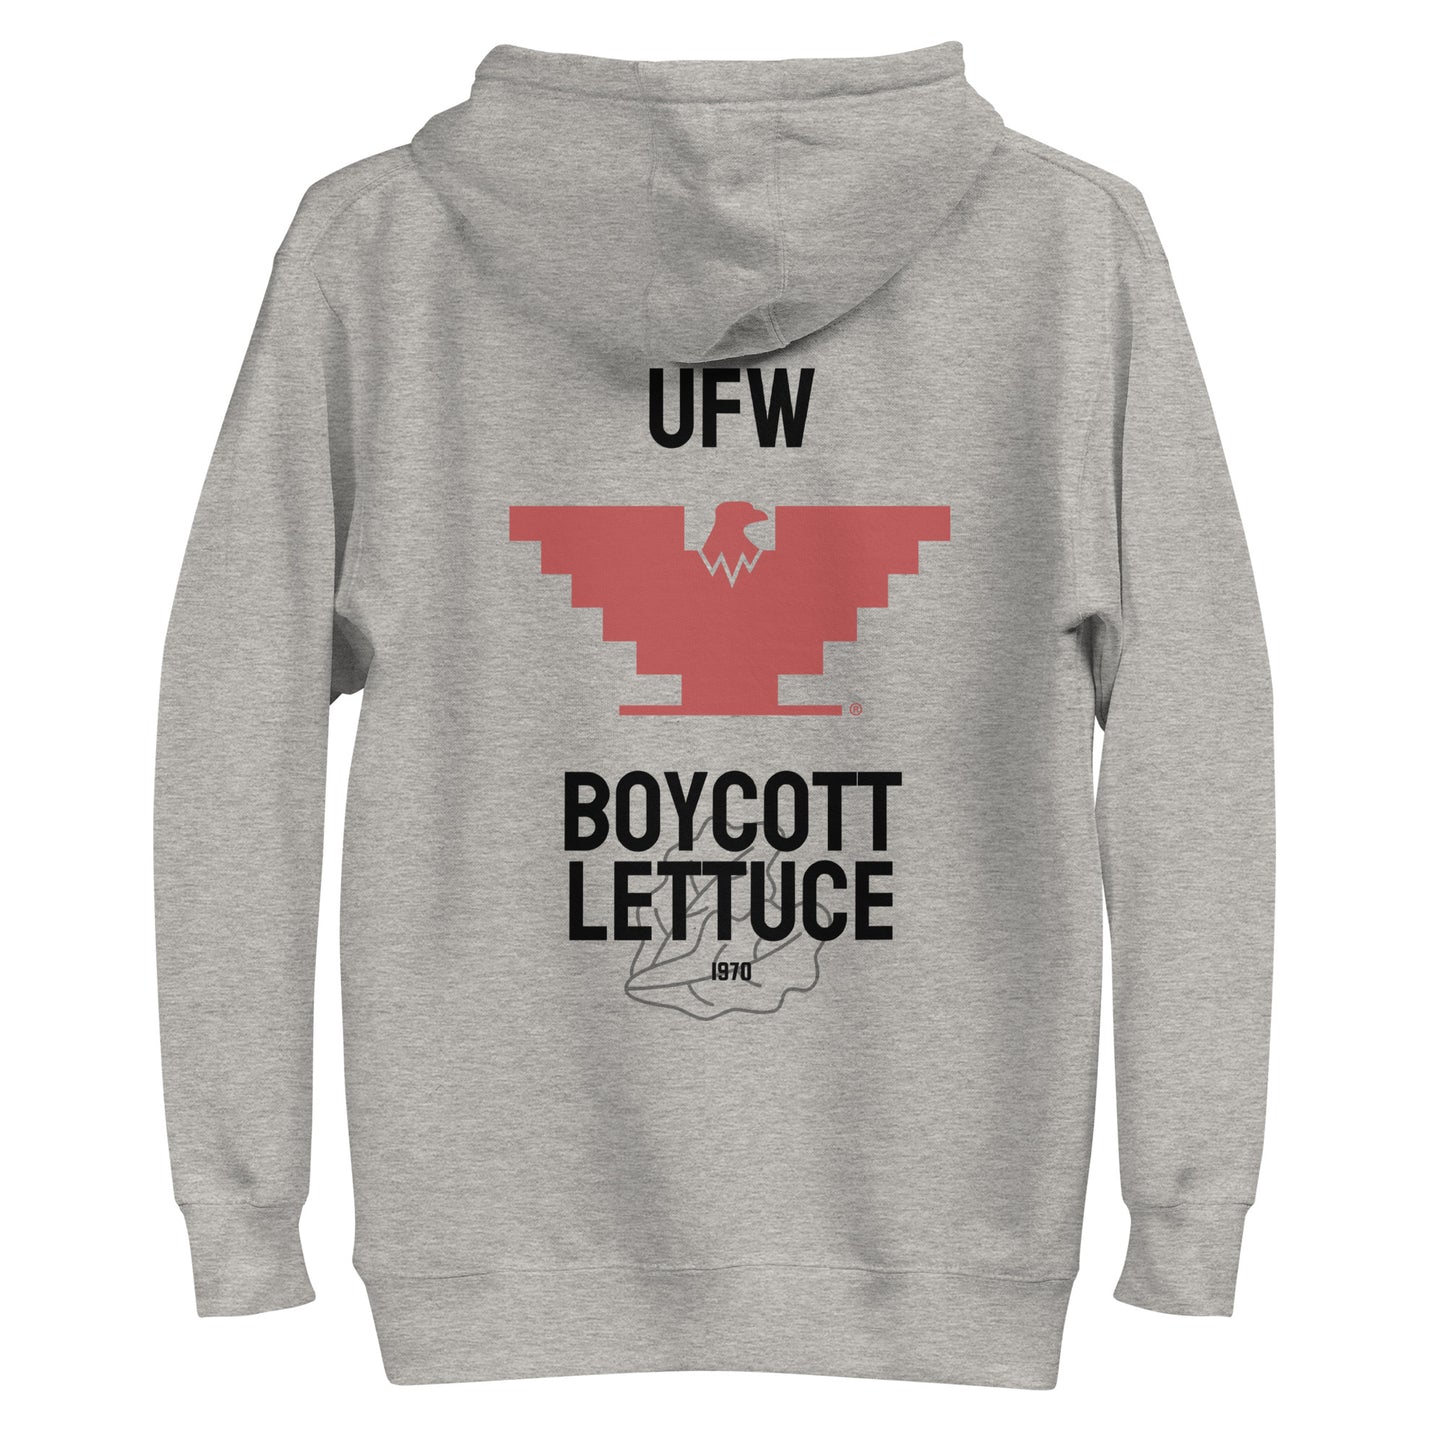 UFW® - Boycott Grapes